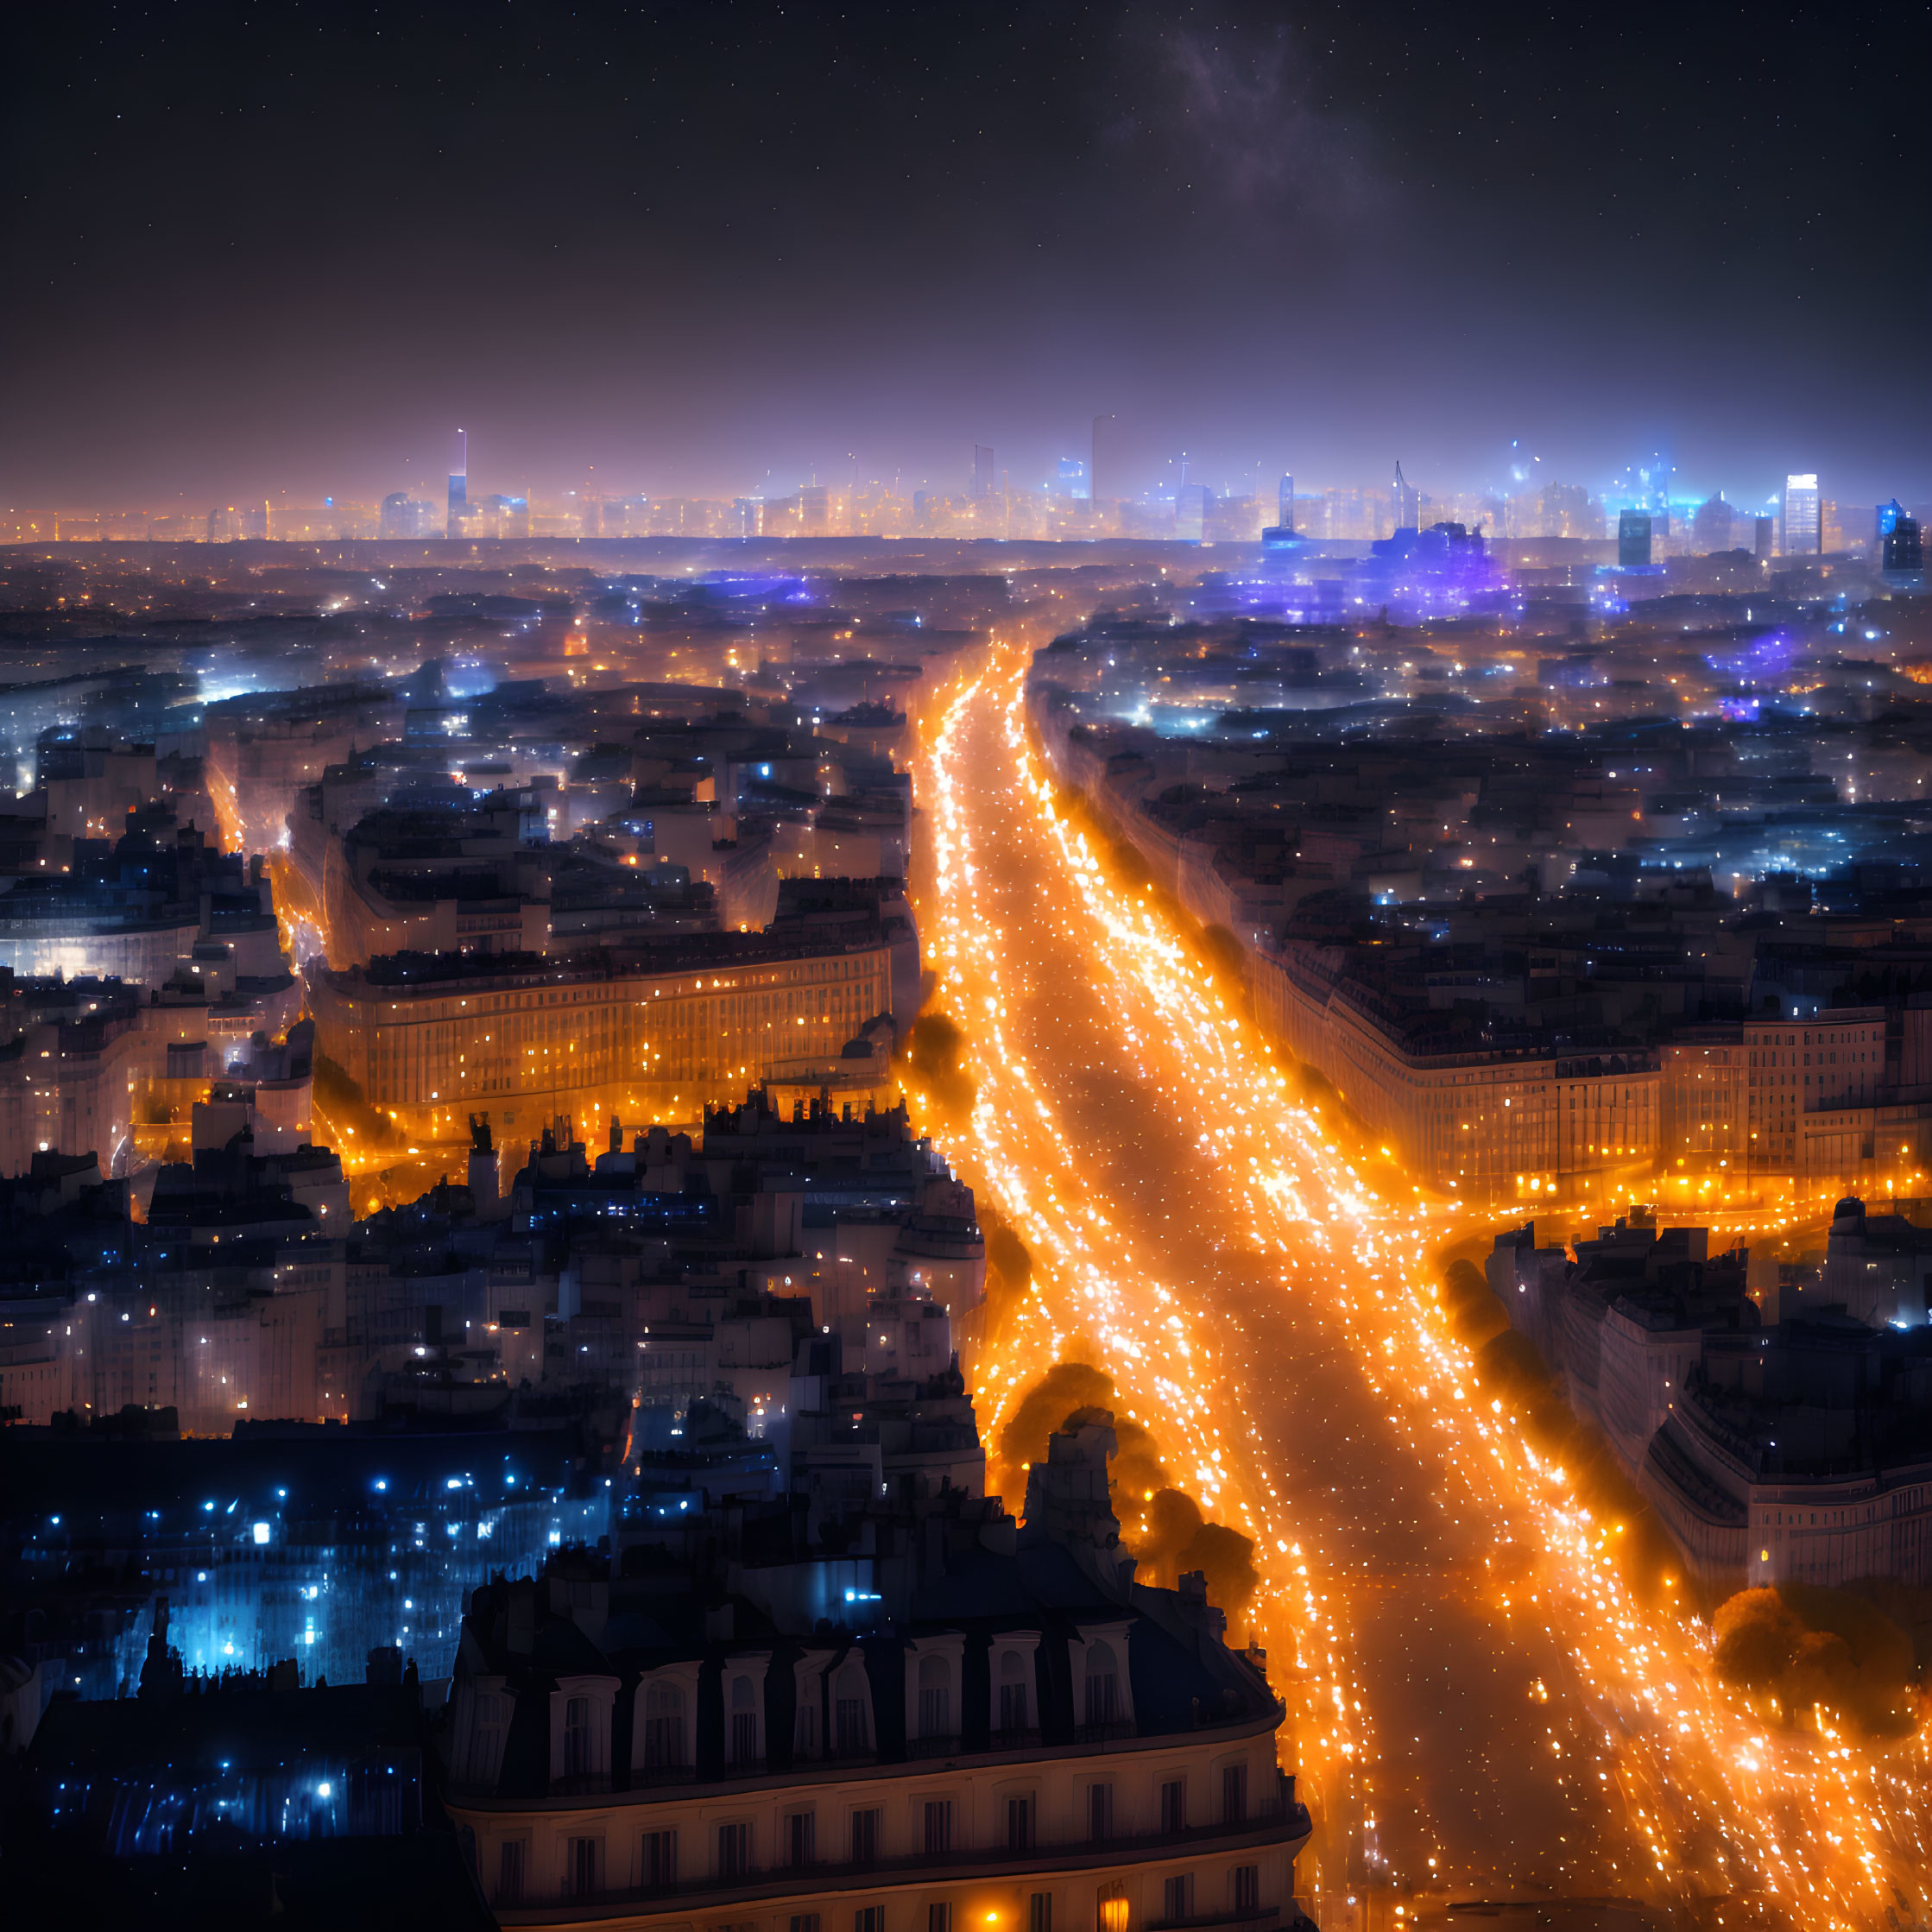 City night view: glowing streets, golden buildings, hazy skyline